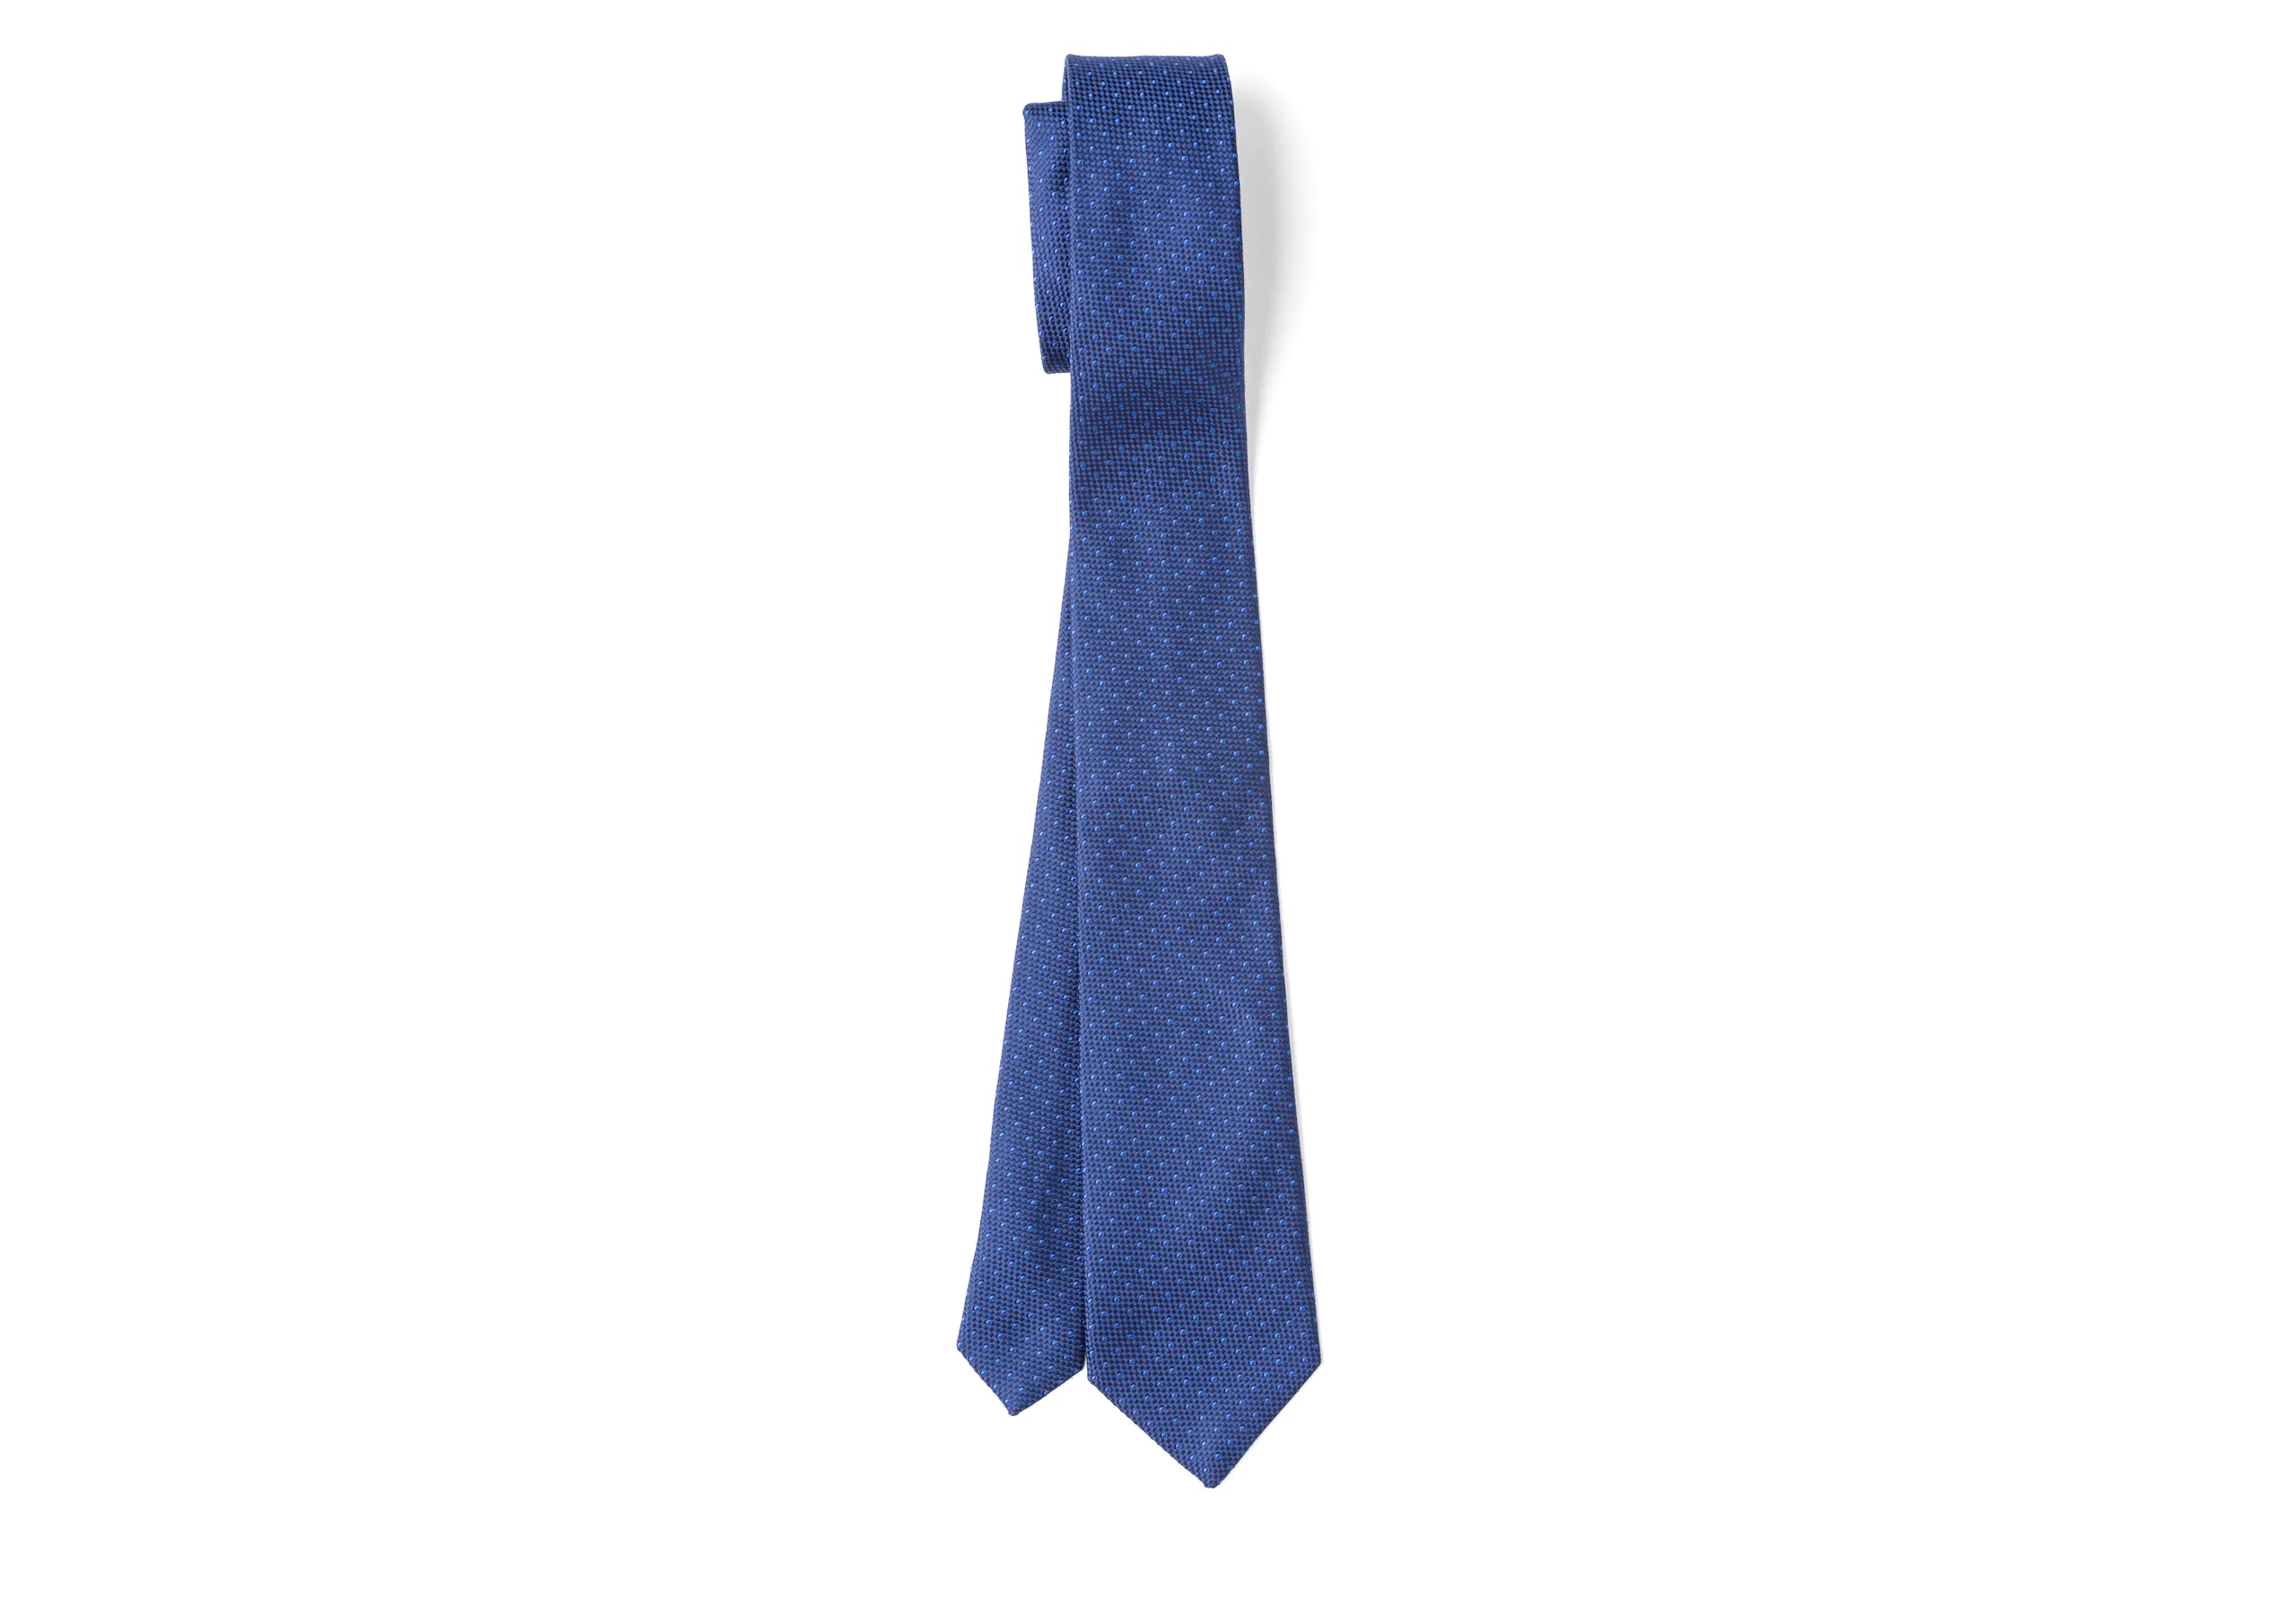 Woven pin dot tie
Silk Weave Navy - 1